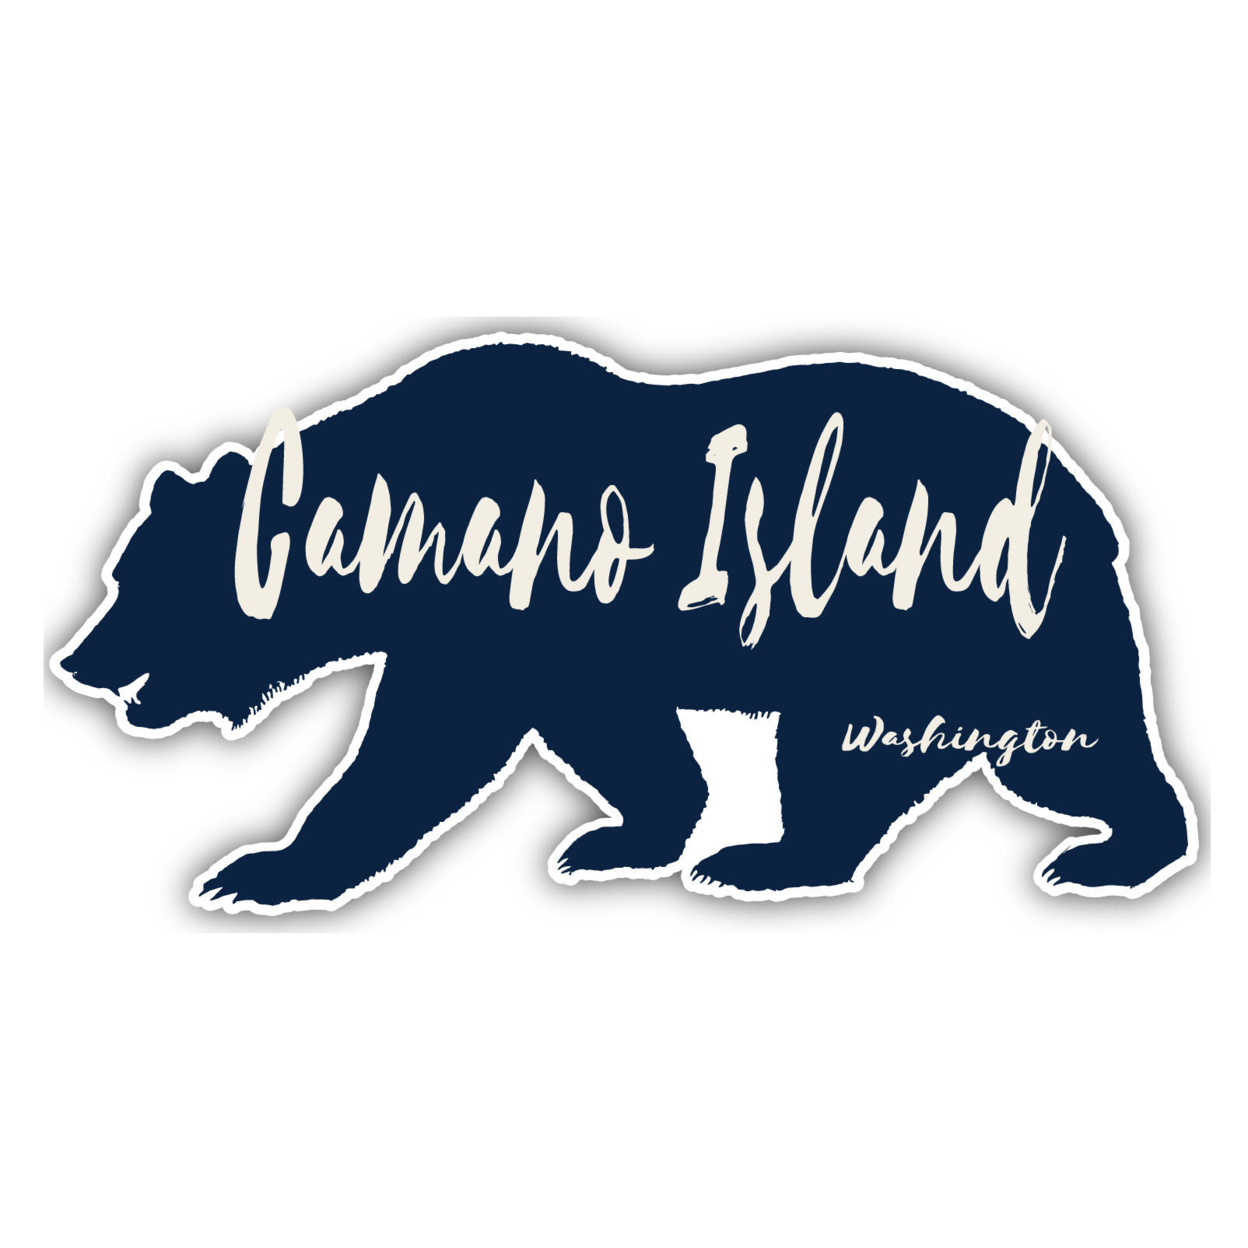 Camano Island Washington Souvenir Decorative Stickers (Choose Theme And Size) - Single Unit, 4-Inch, Bear